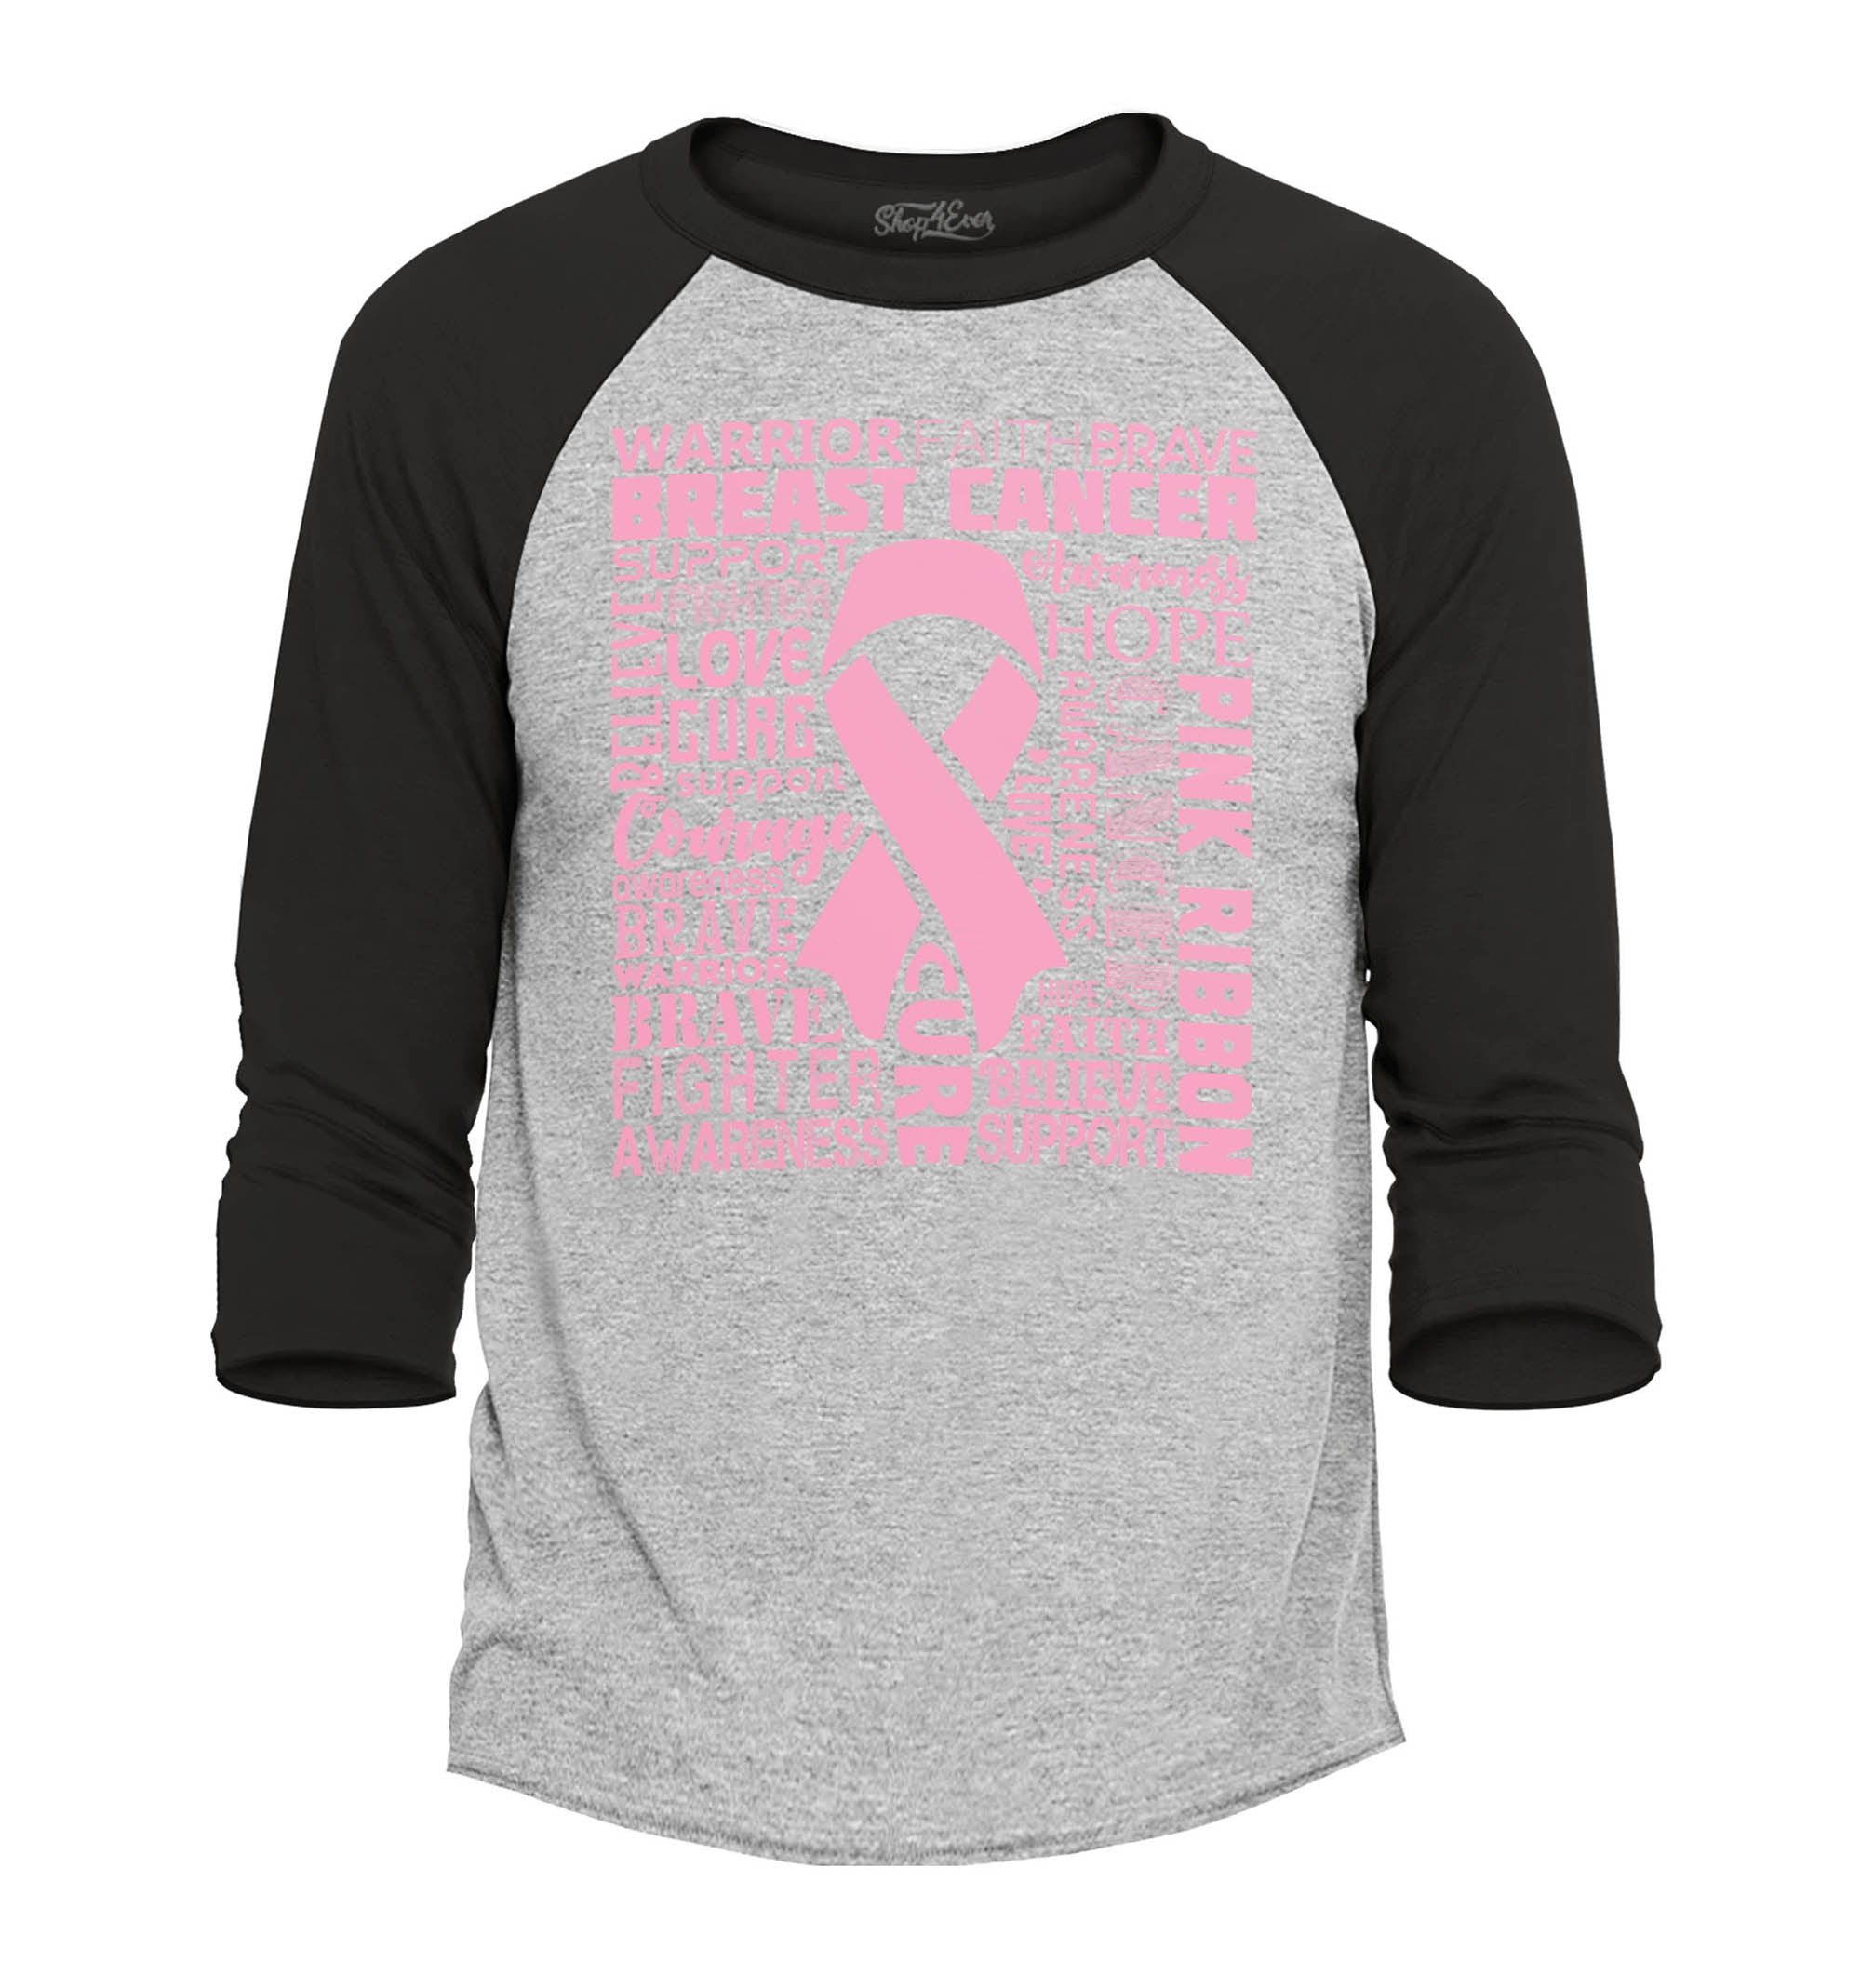 Breast Cancer Awareness Pink Ribbon Word Cloud Raglan Baseball Shirt